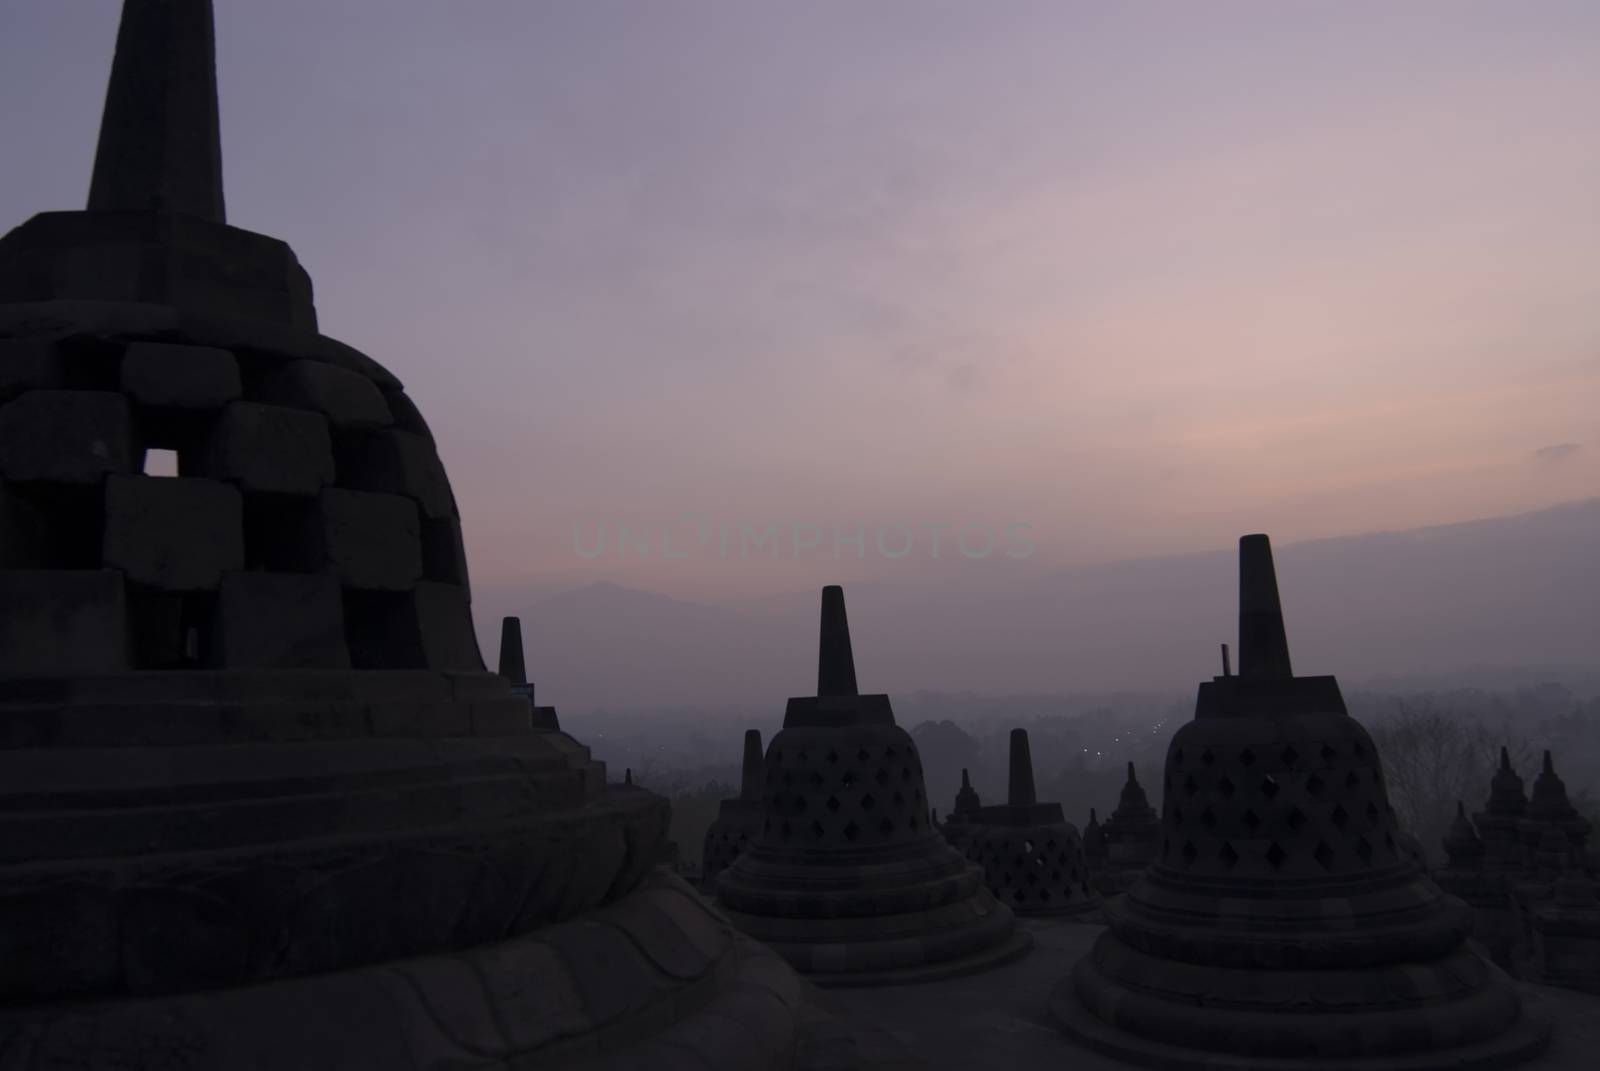 The Borobudur Temple, Java, Indonesia